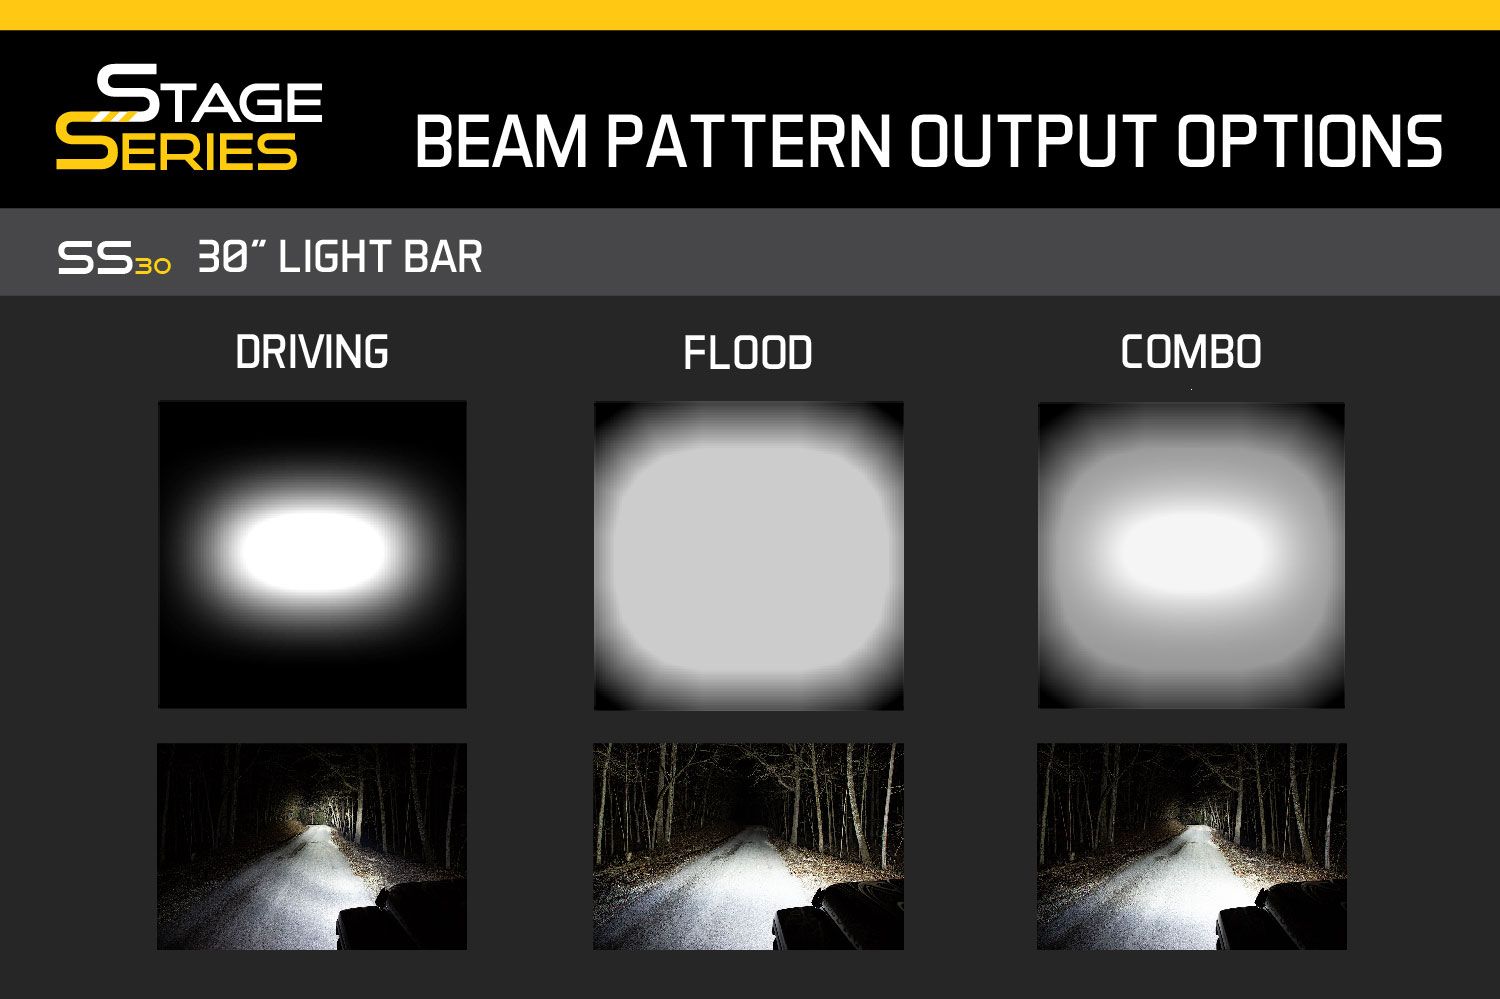 Stealth Lightbar Kit For 2015-2020 GMC Canyon